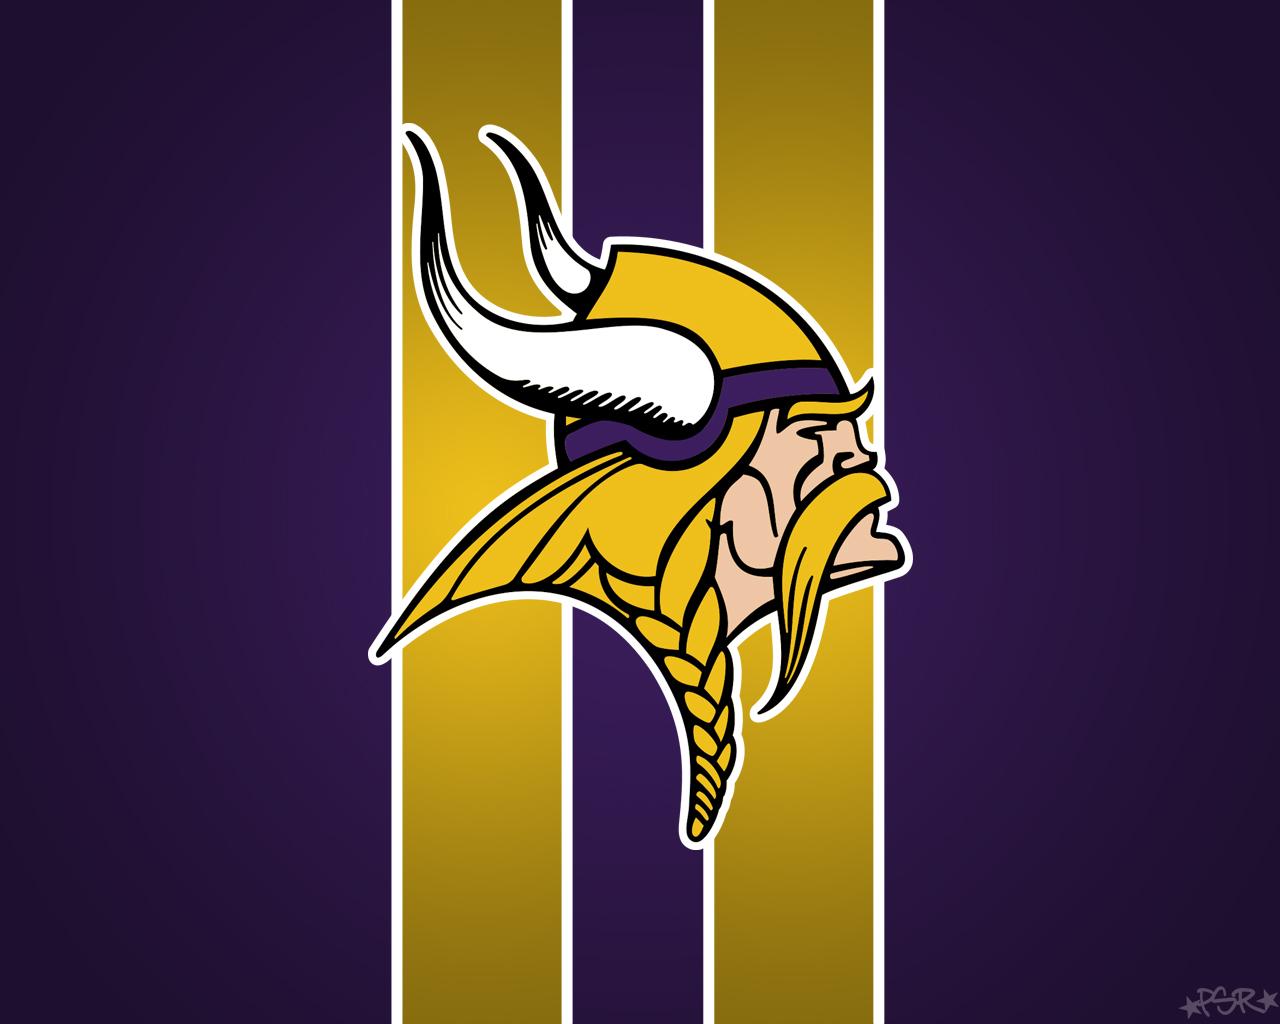 Minnesota Vikings at 1024 x 768 size wallpapers HD quality